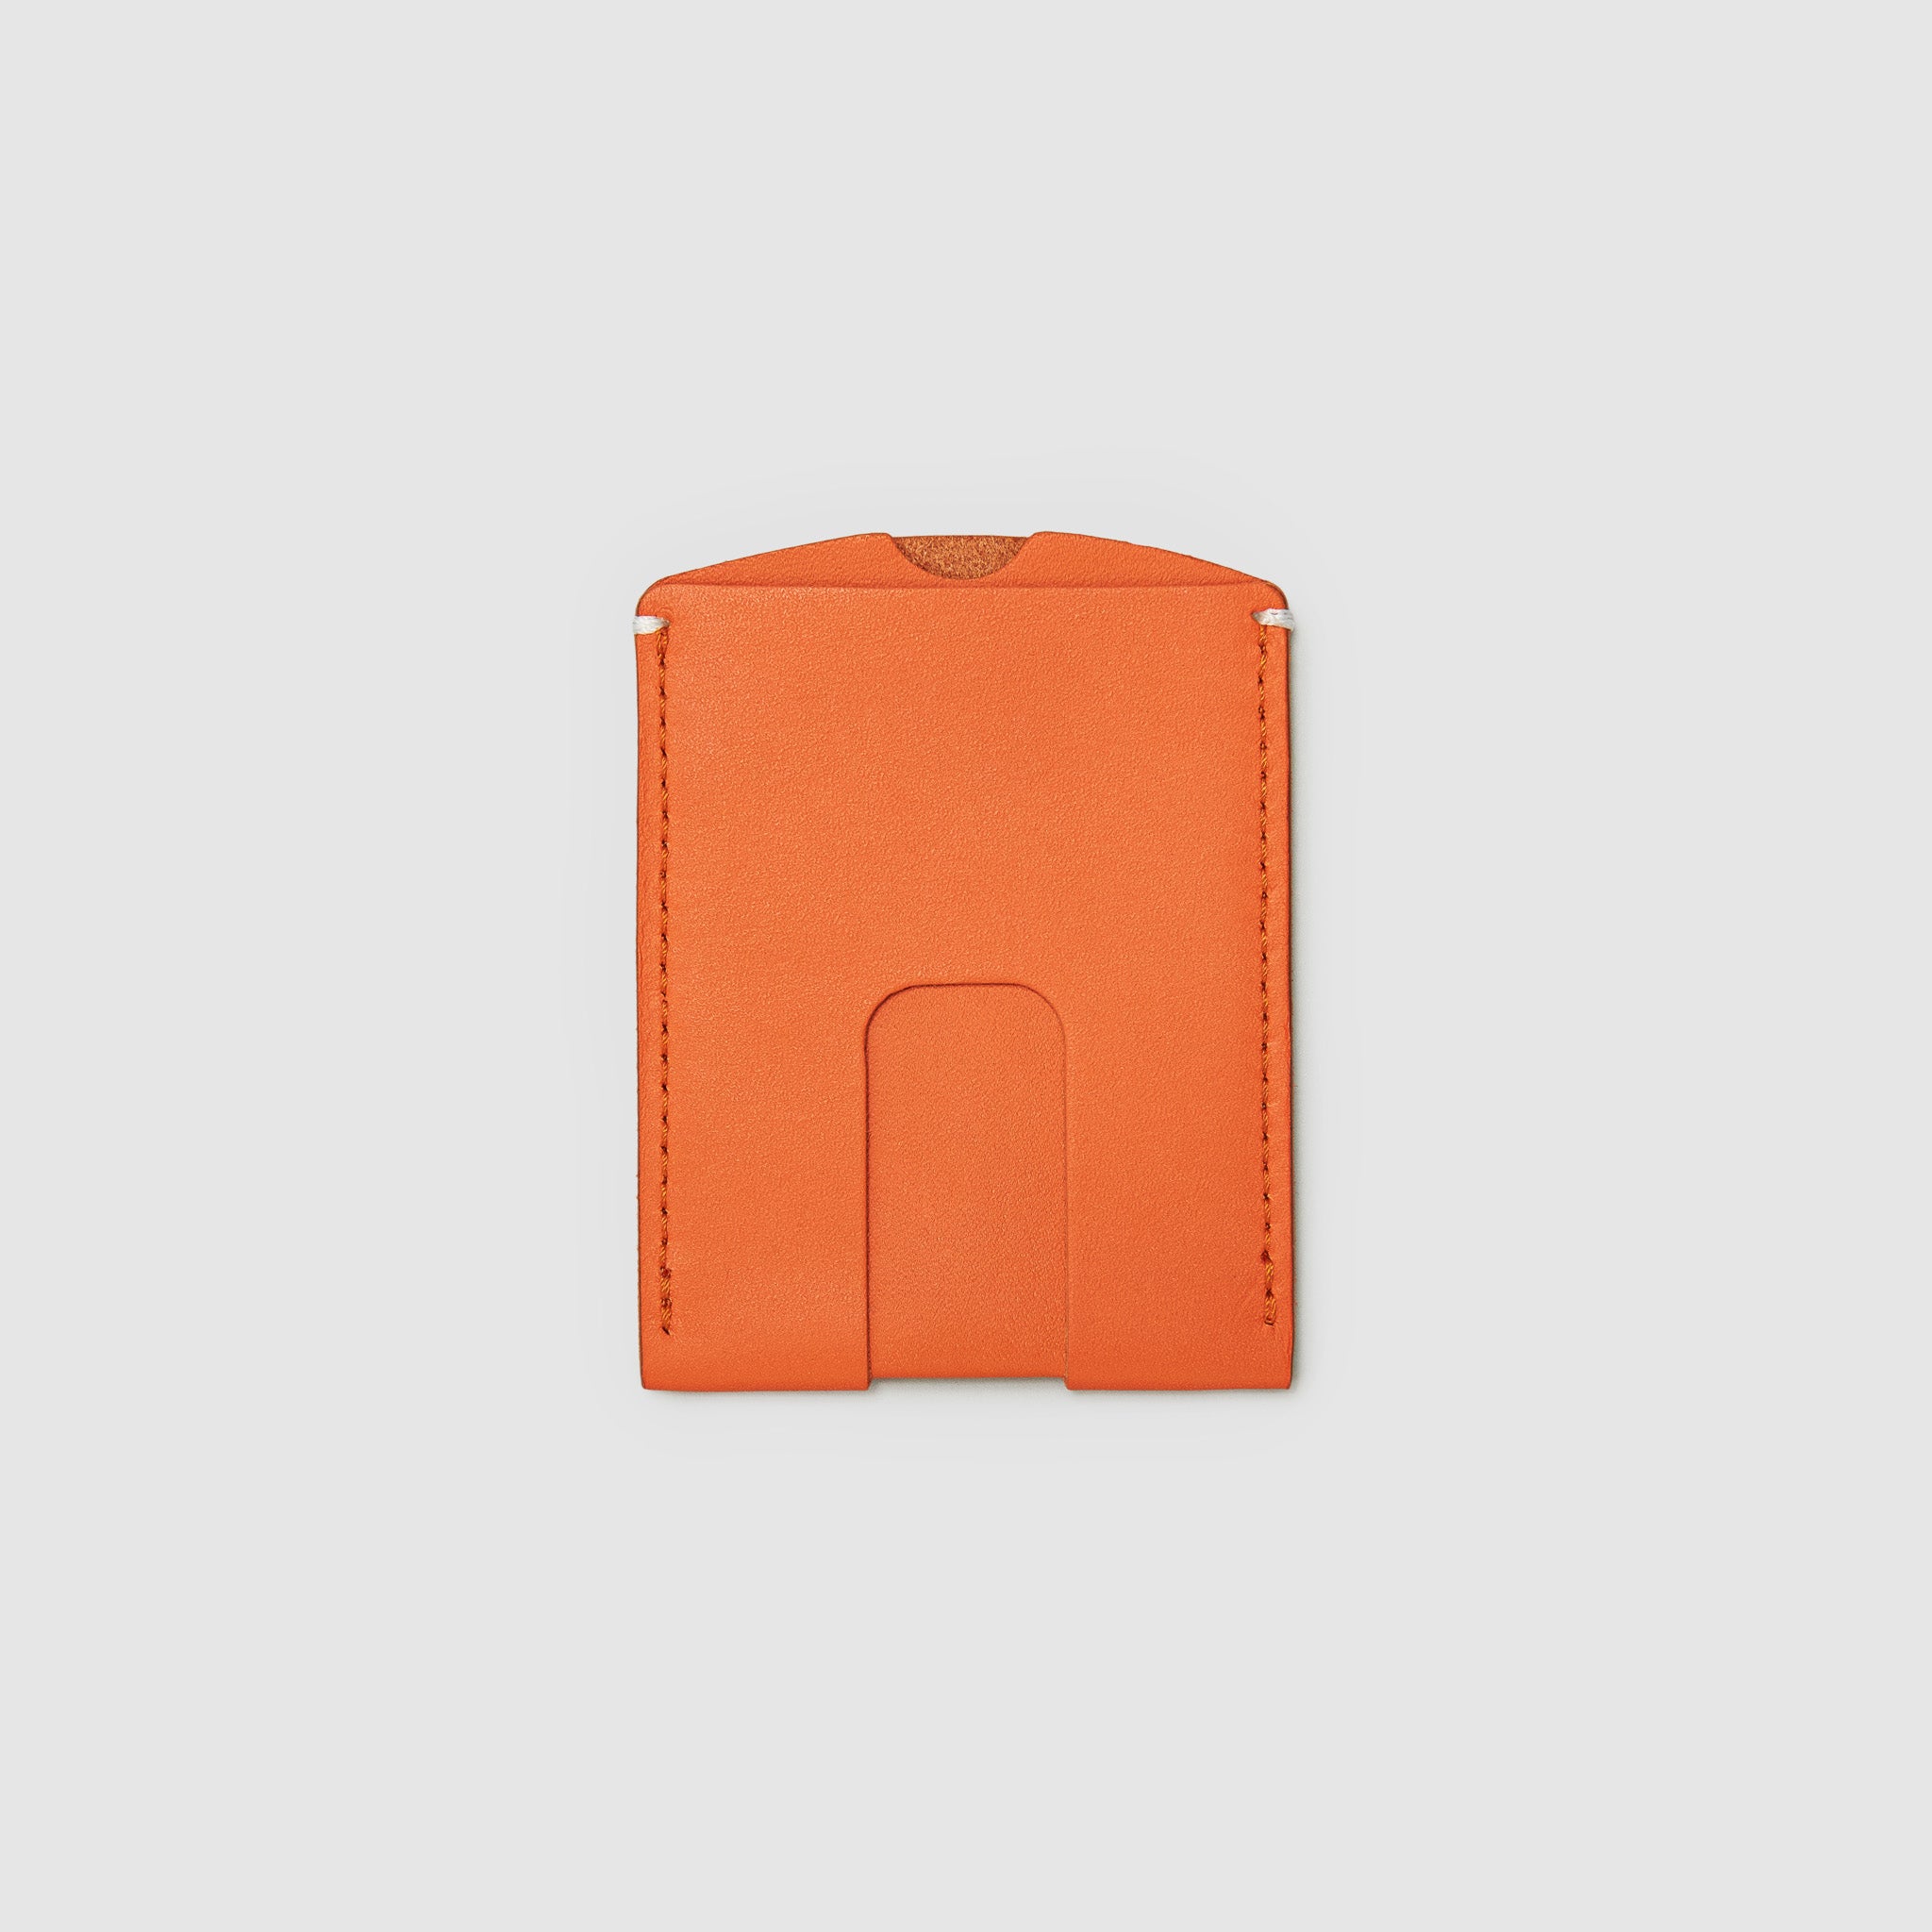 Anson Calder Card Holder Wallet french calfskin leather _fshd-orange